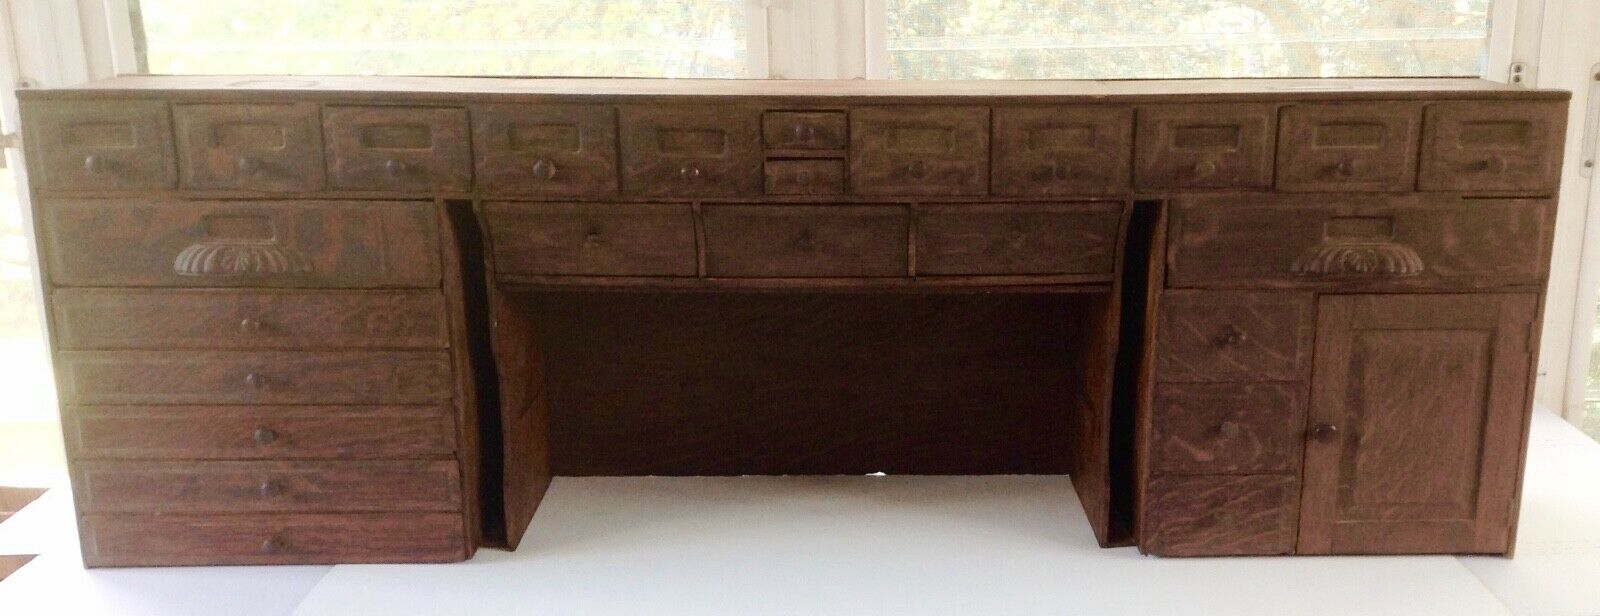 Antique Quarter Sawn Oak Roll Top Desk Insert 26 Drawers Furniture Salvage Piece